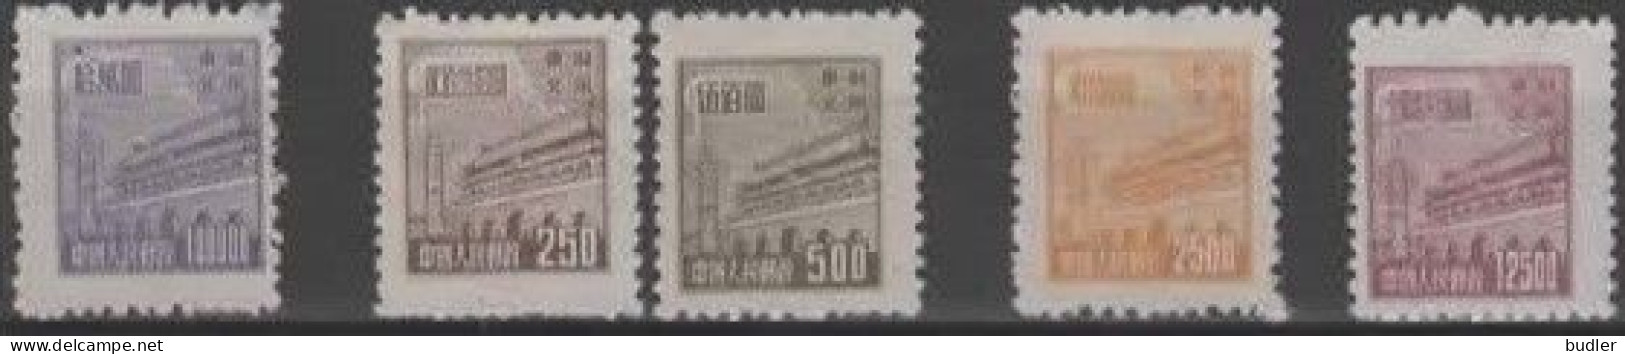 Noord-Oost CHINA [13] :1950: Y.165-67,169,171* :  100.000 / 250 / 500 / 2.500 12.500 $ : Porte De La Paix Céleste E - Nordostchina 1946-48